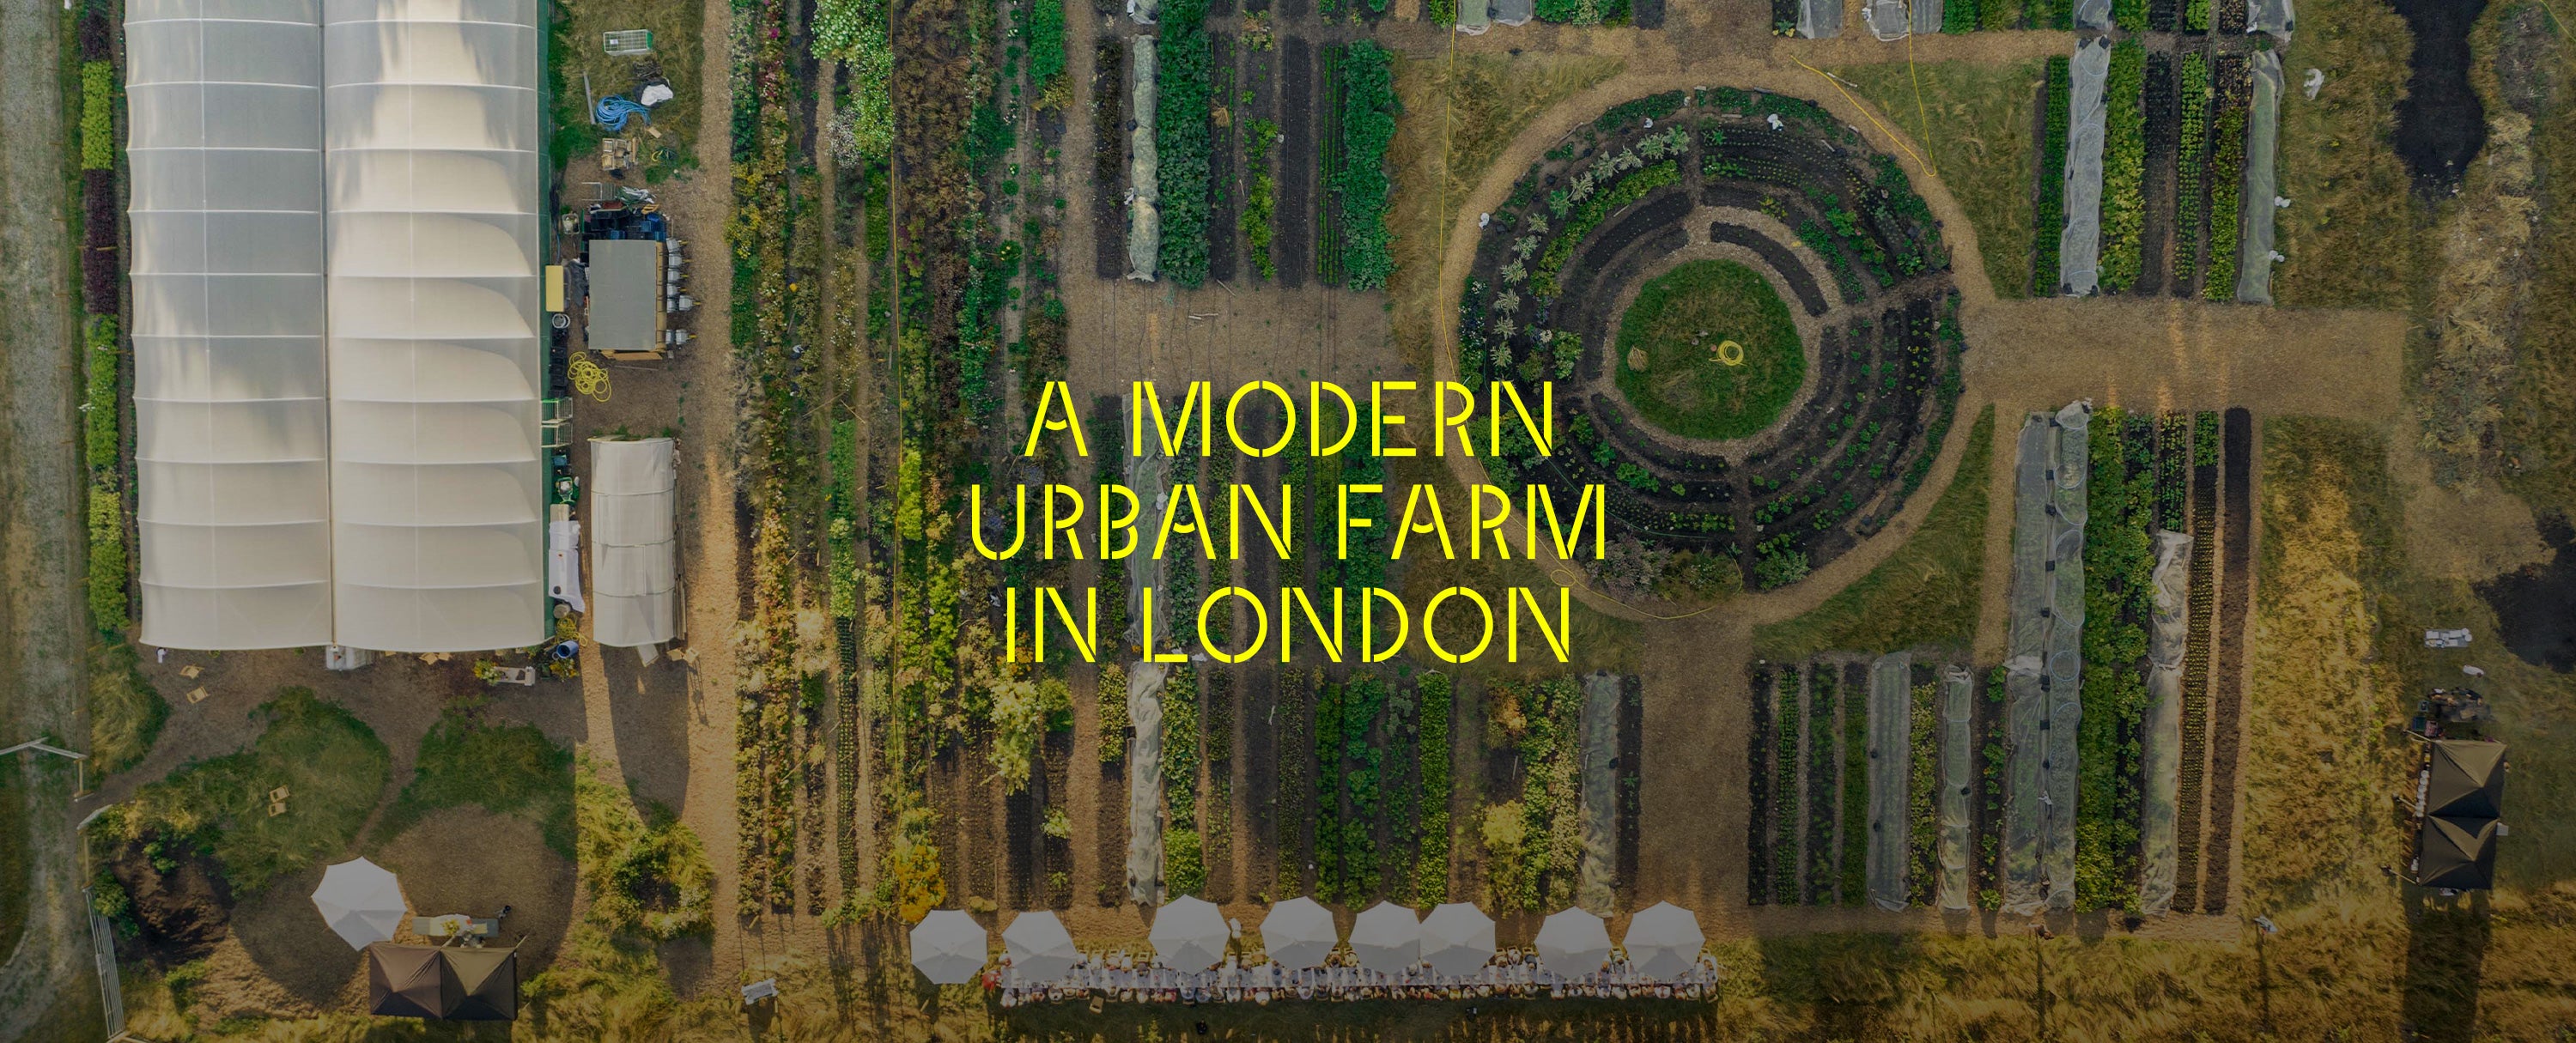 A MODERN URBAN FARM IN LONDON